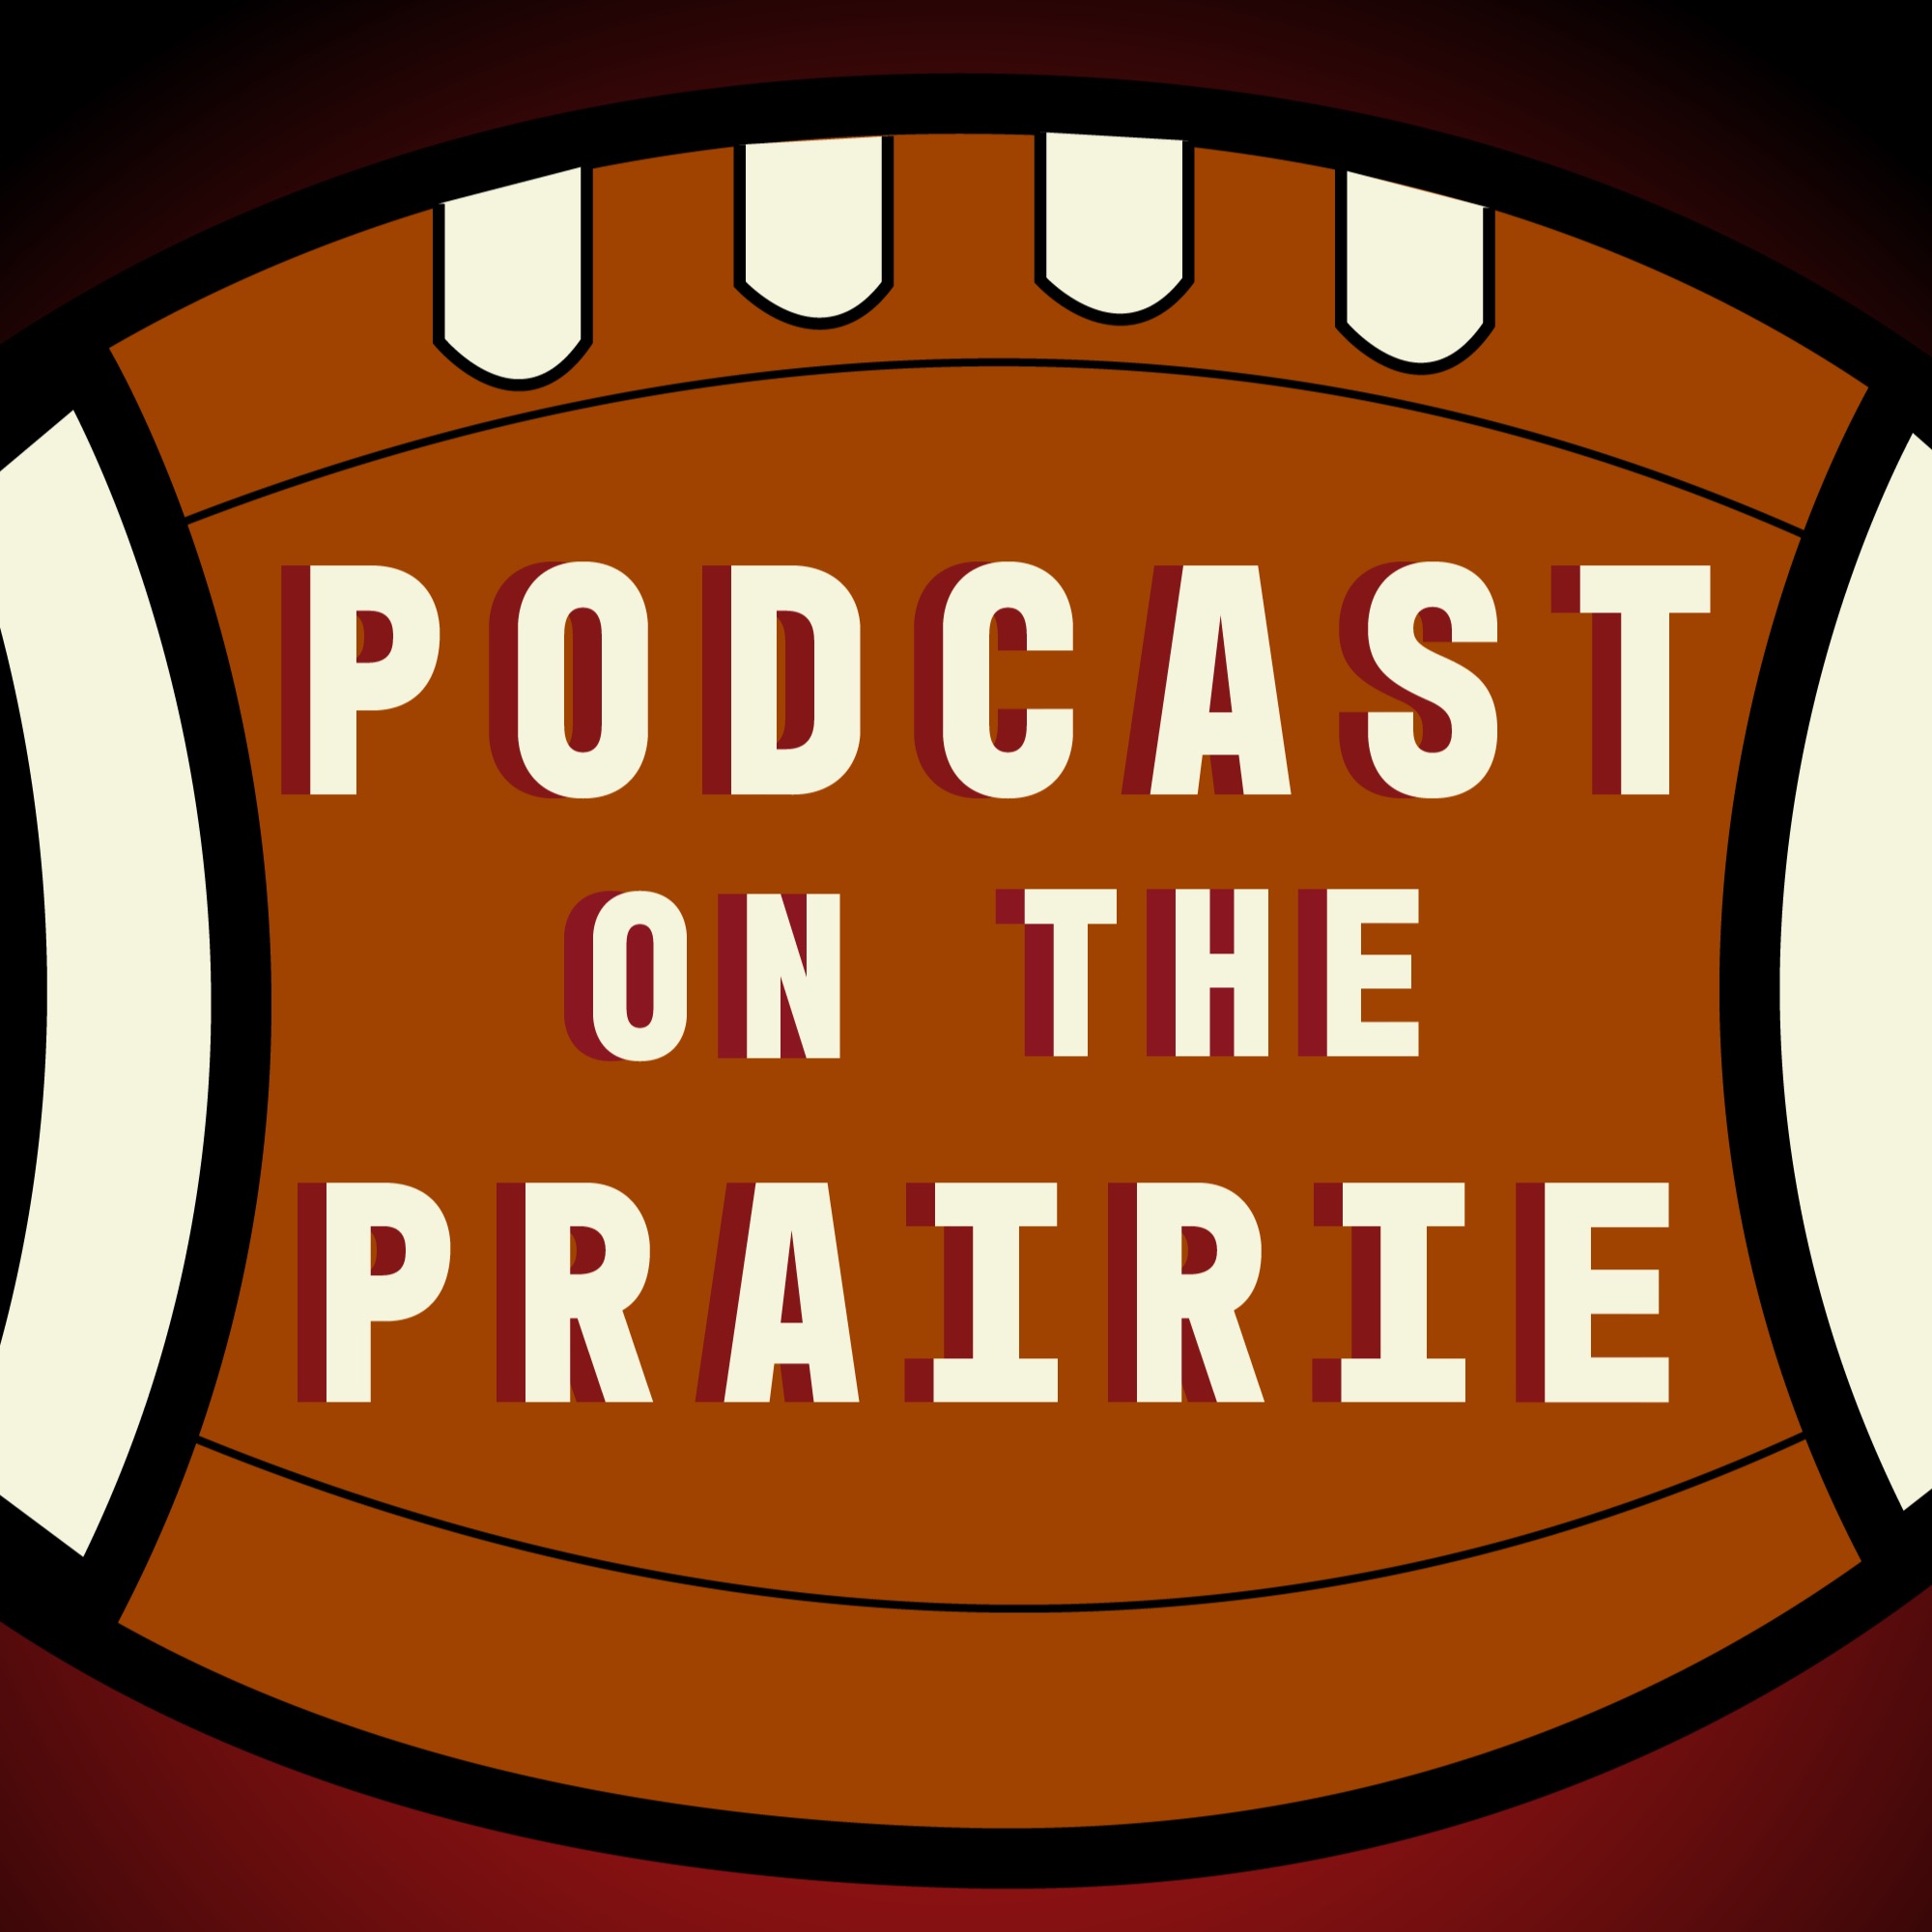 Podcast on the Prairie